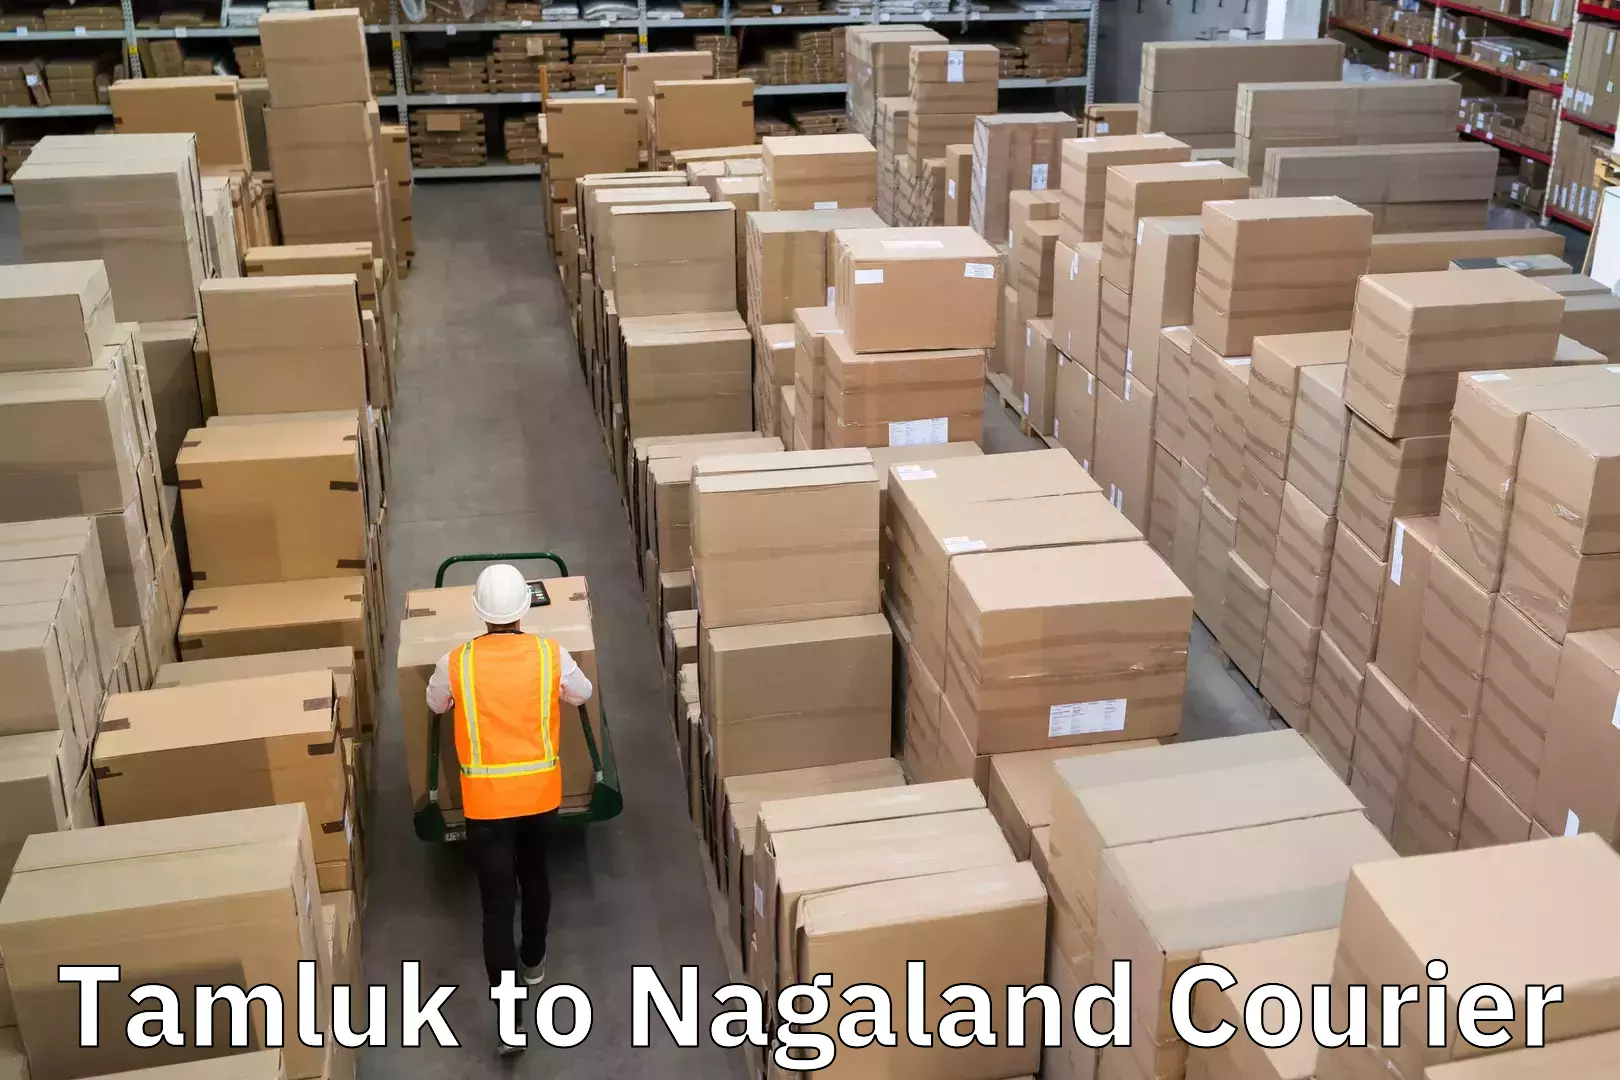 Delivery service partnership Tamluk to Nagaland